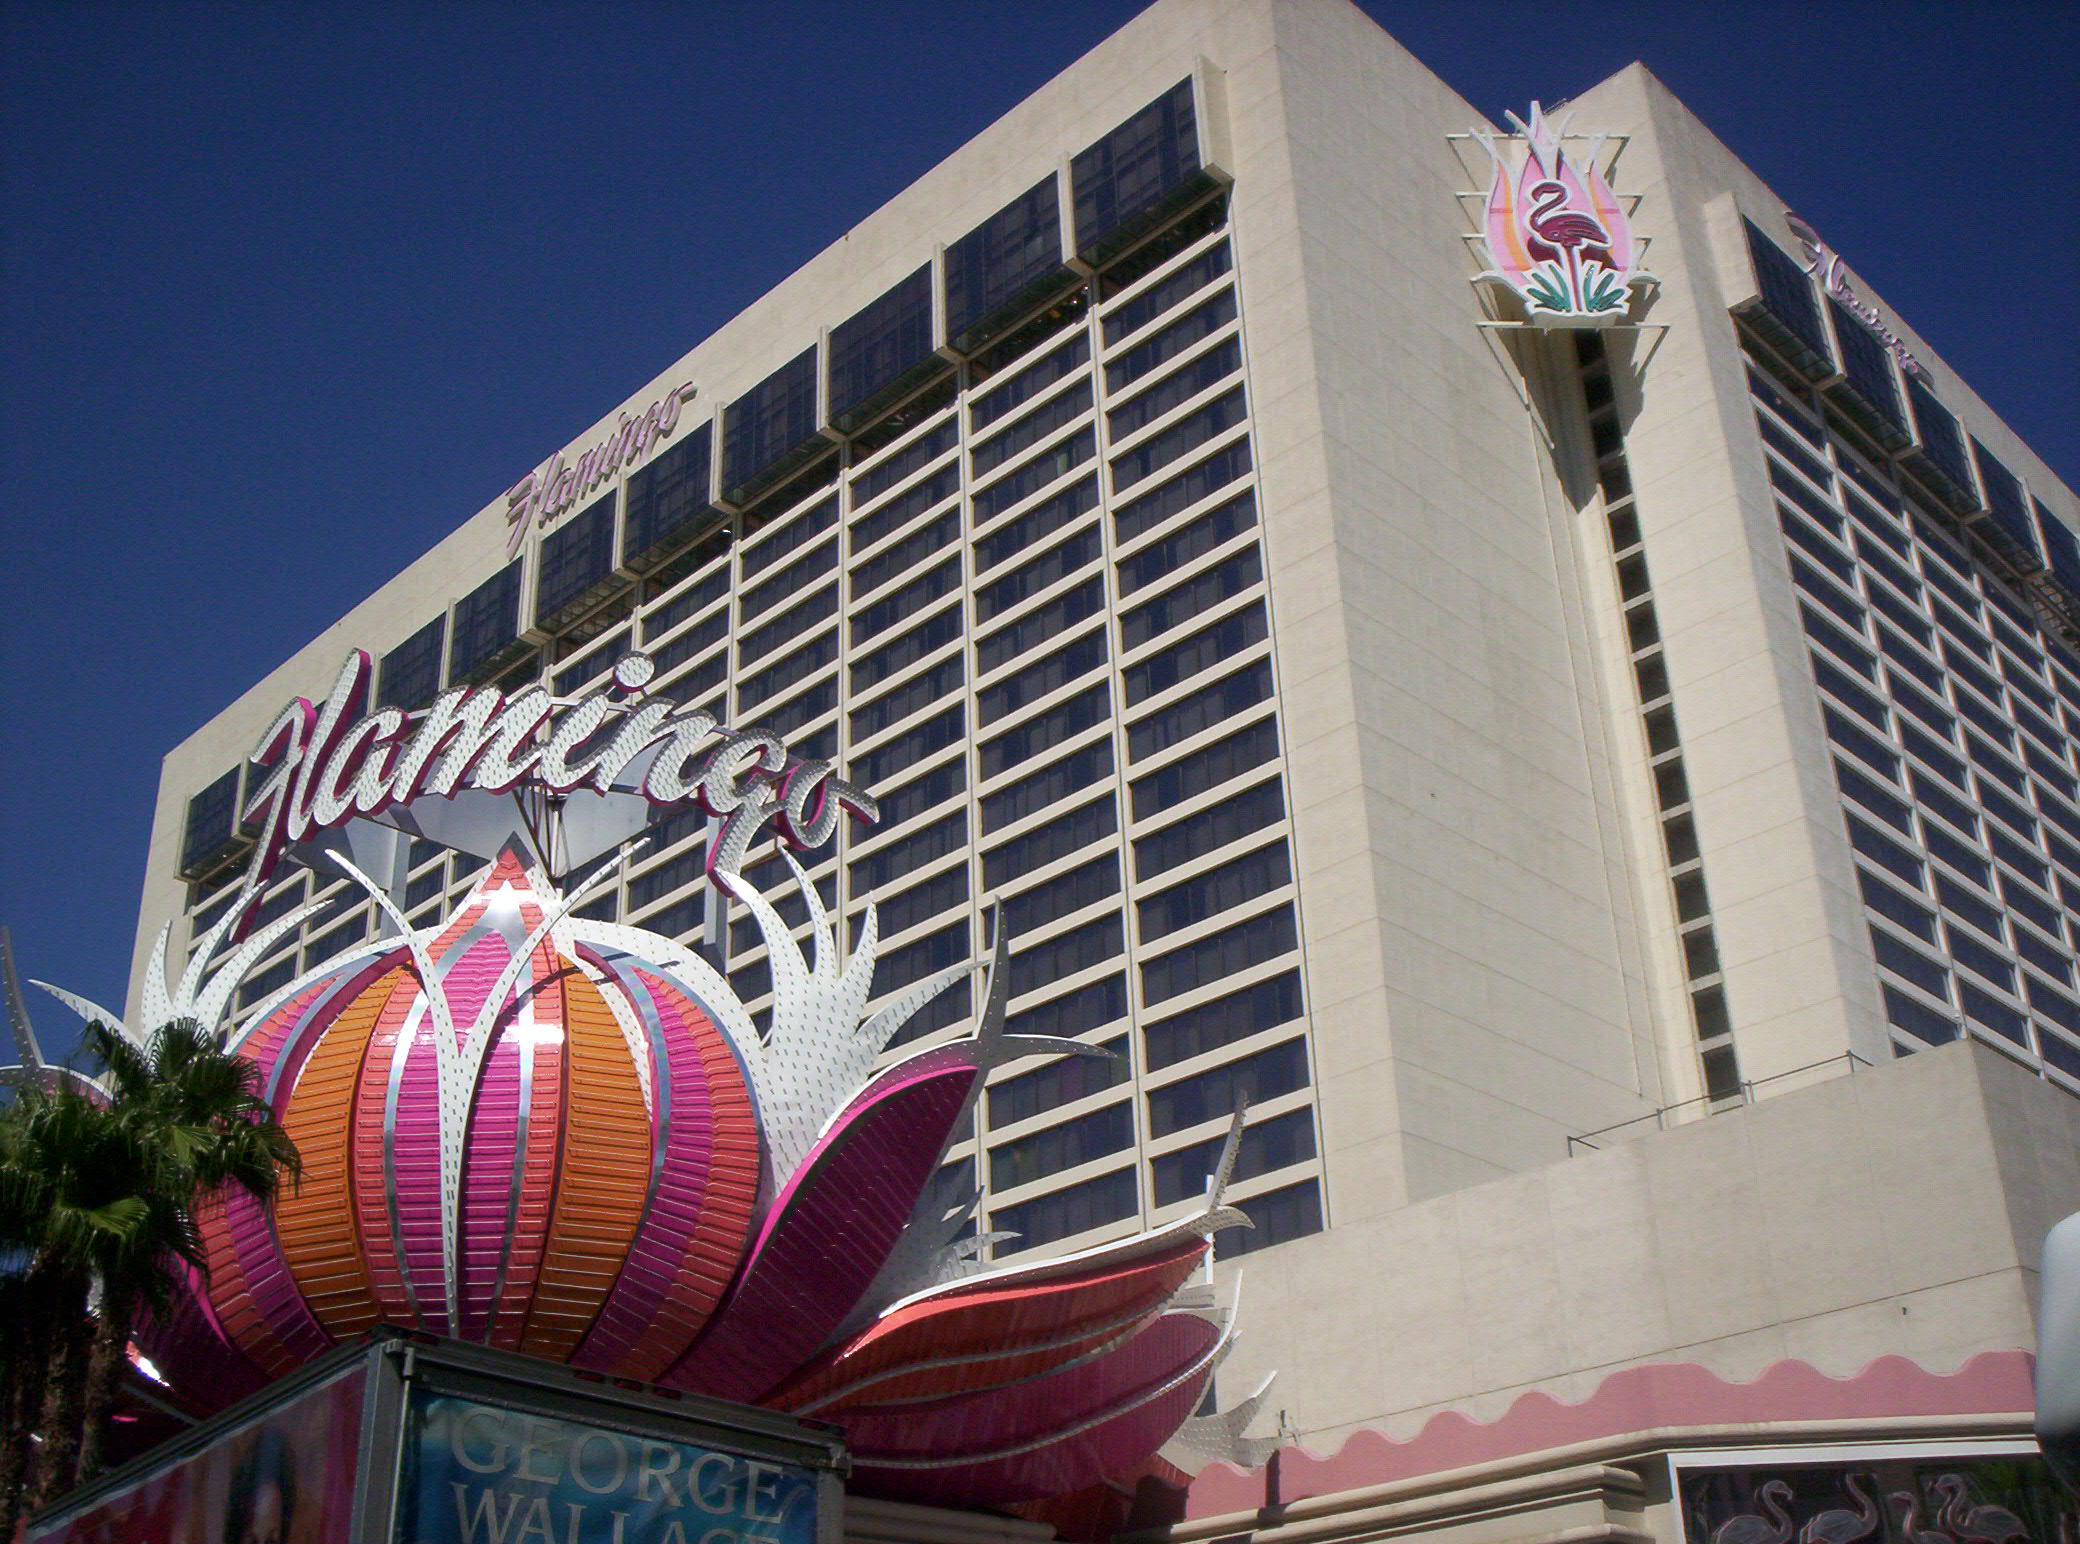 Guest wins more than $250,000 playing poker at Flamingo Las Vegas